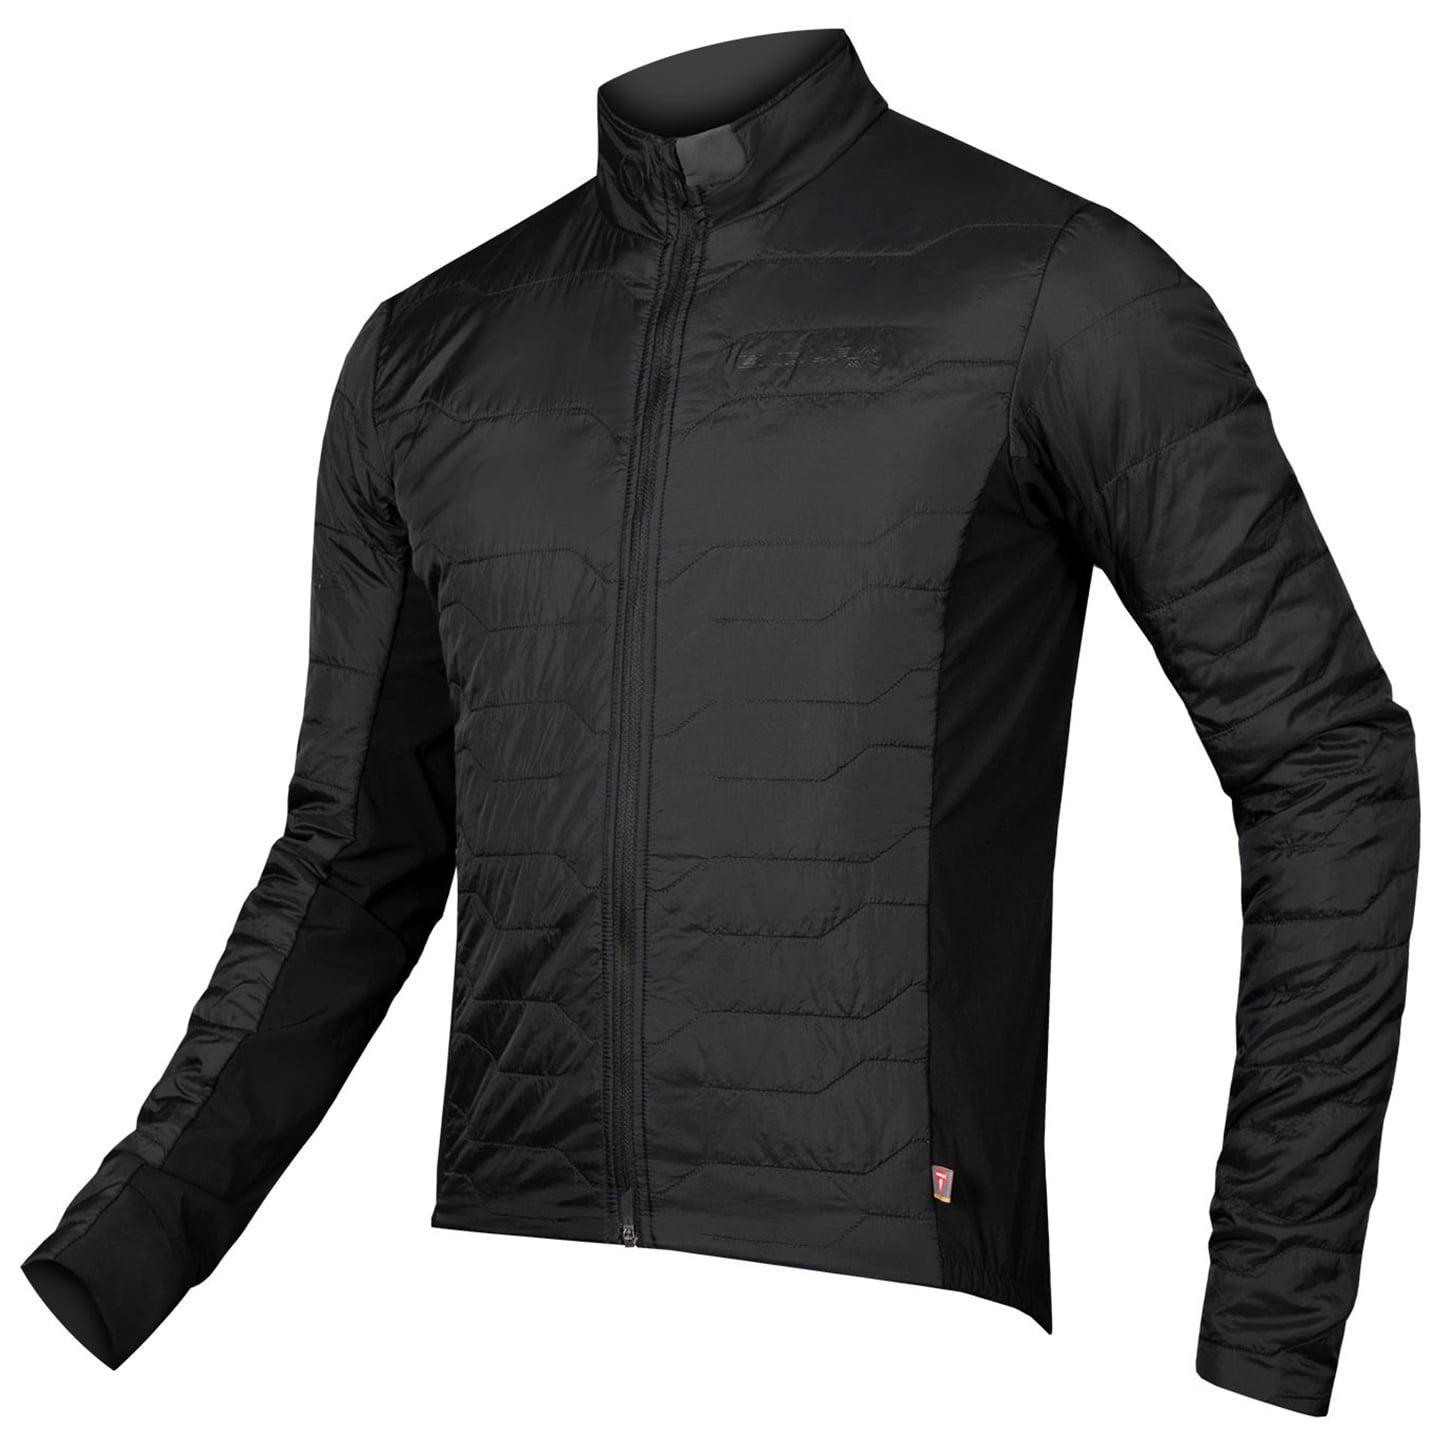 ENDURA Winter Jacket Pro SL Primaloft II Thermal Jacket, for men, size XL, Cycle jacket, Cycle gear